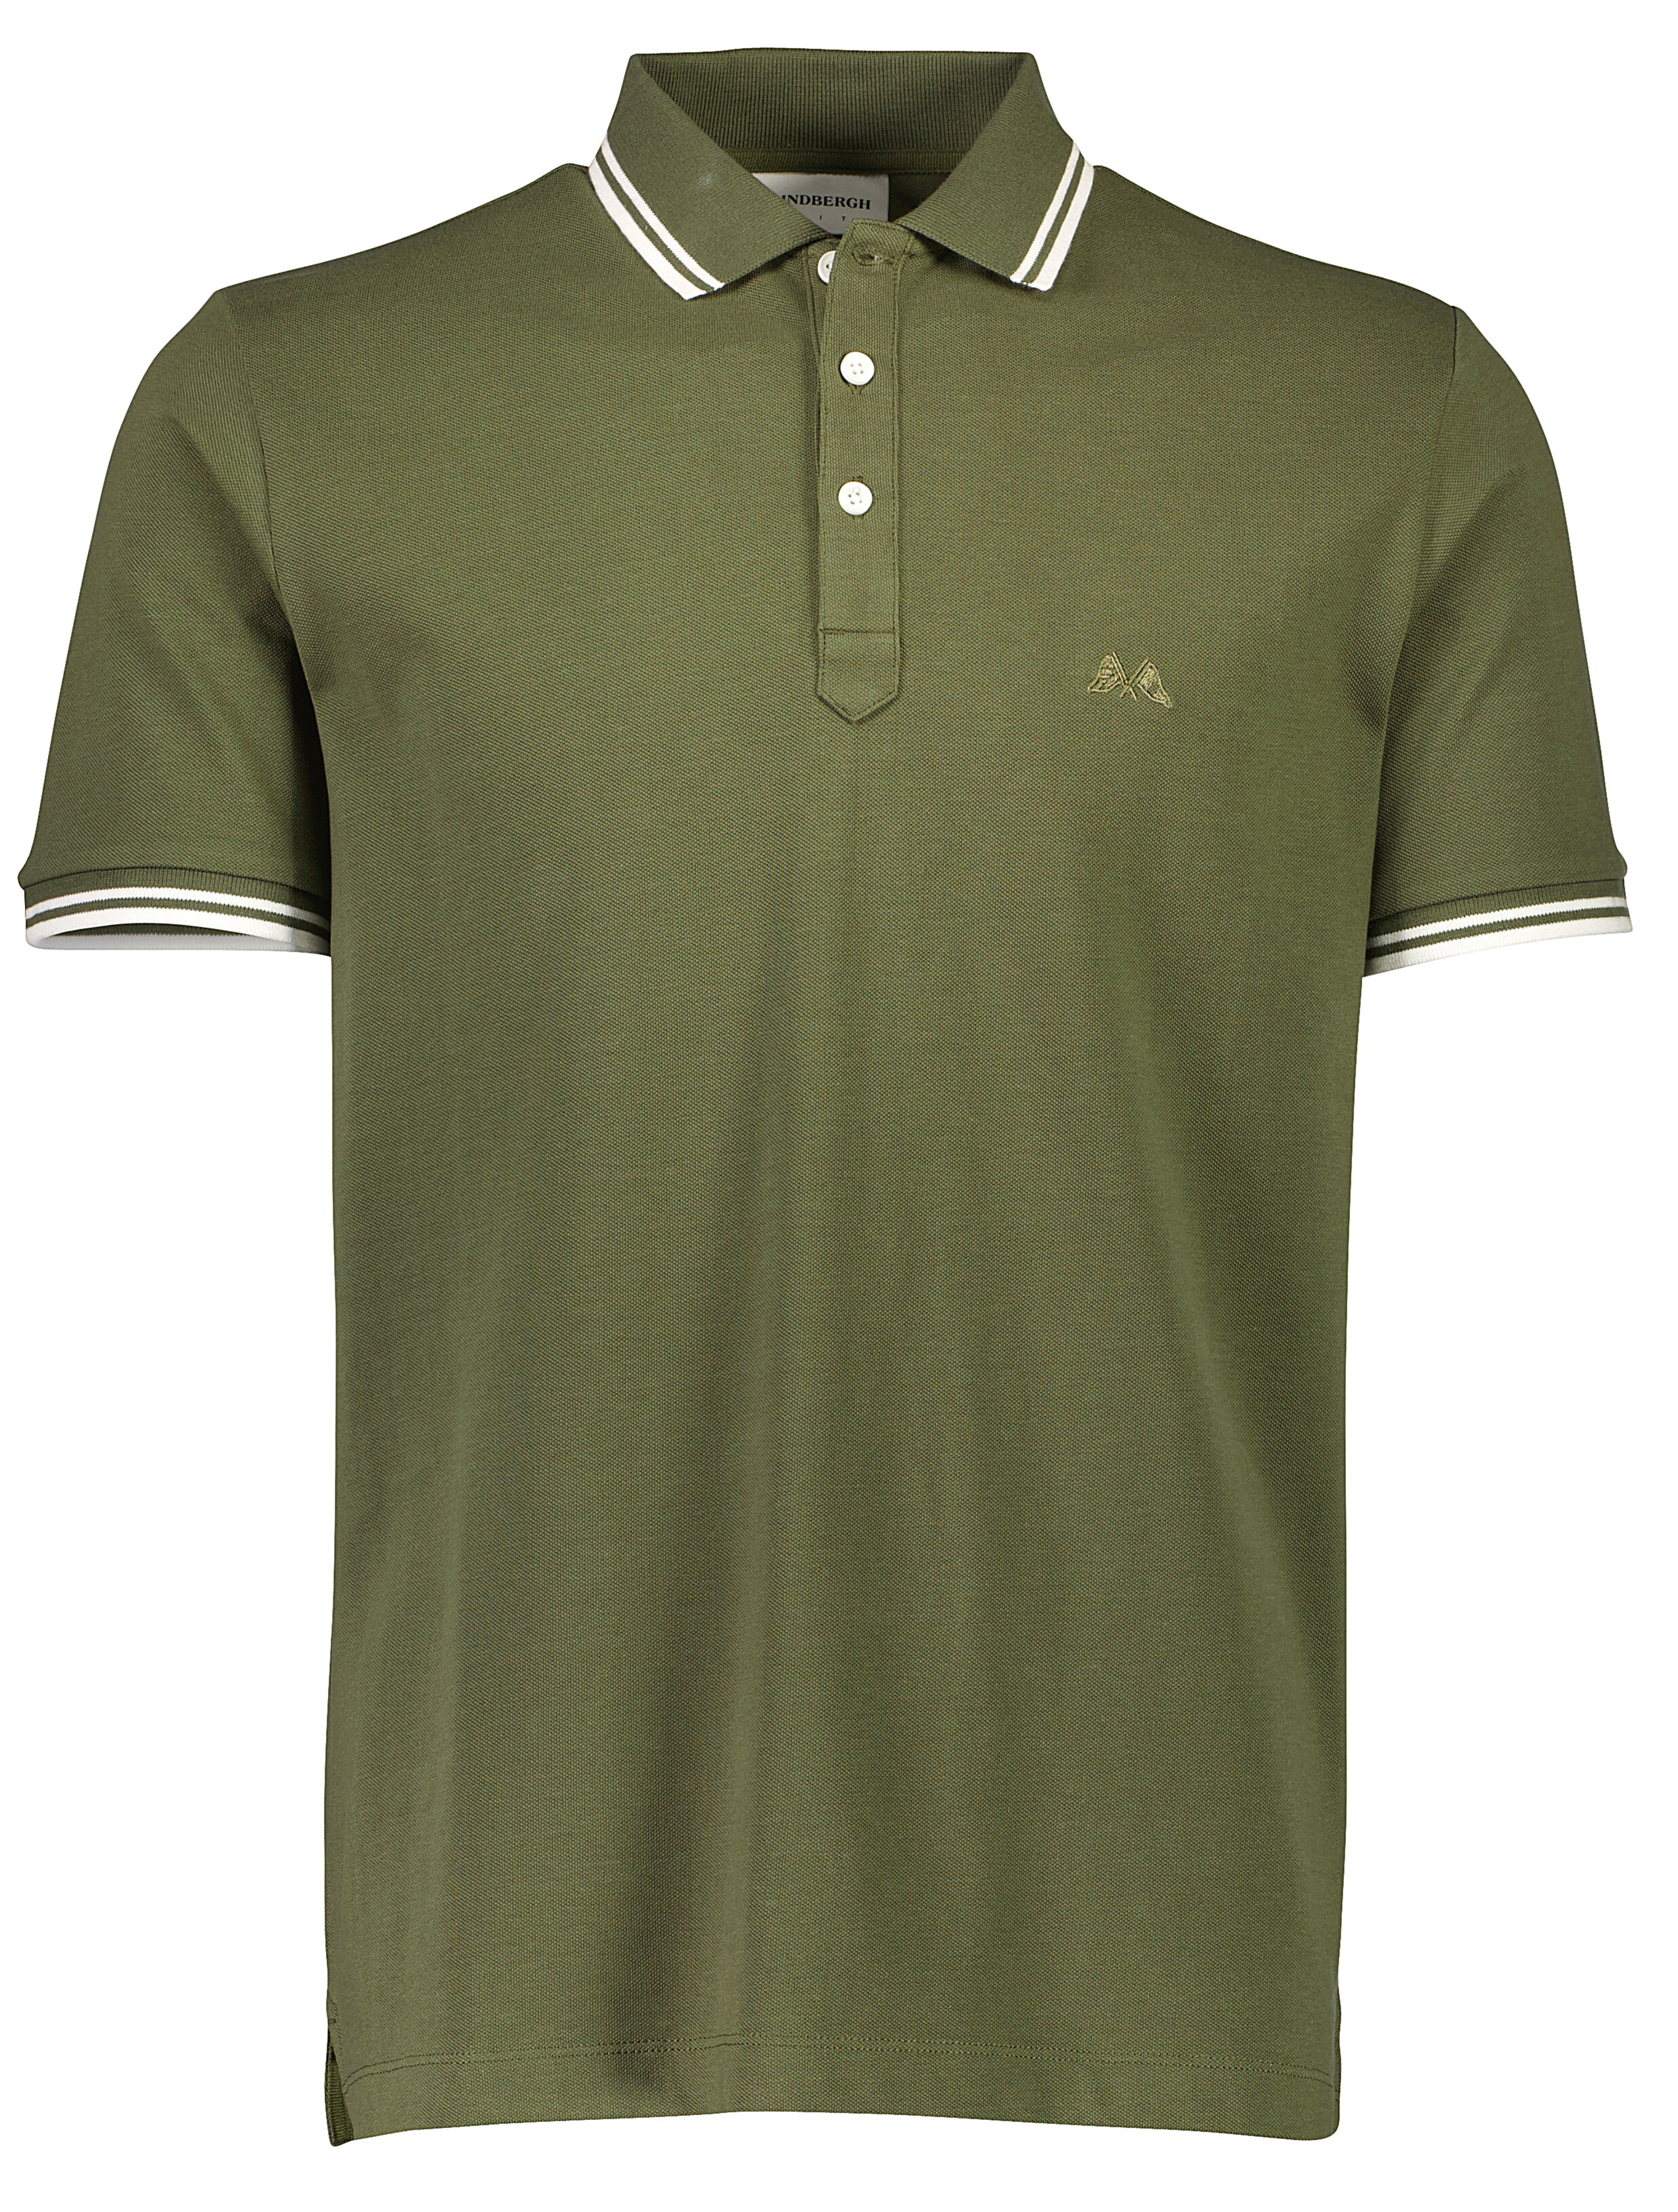 Lindbergh Polo shirt green / army